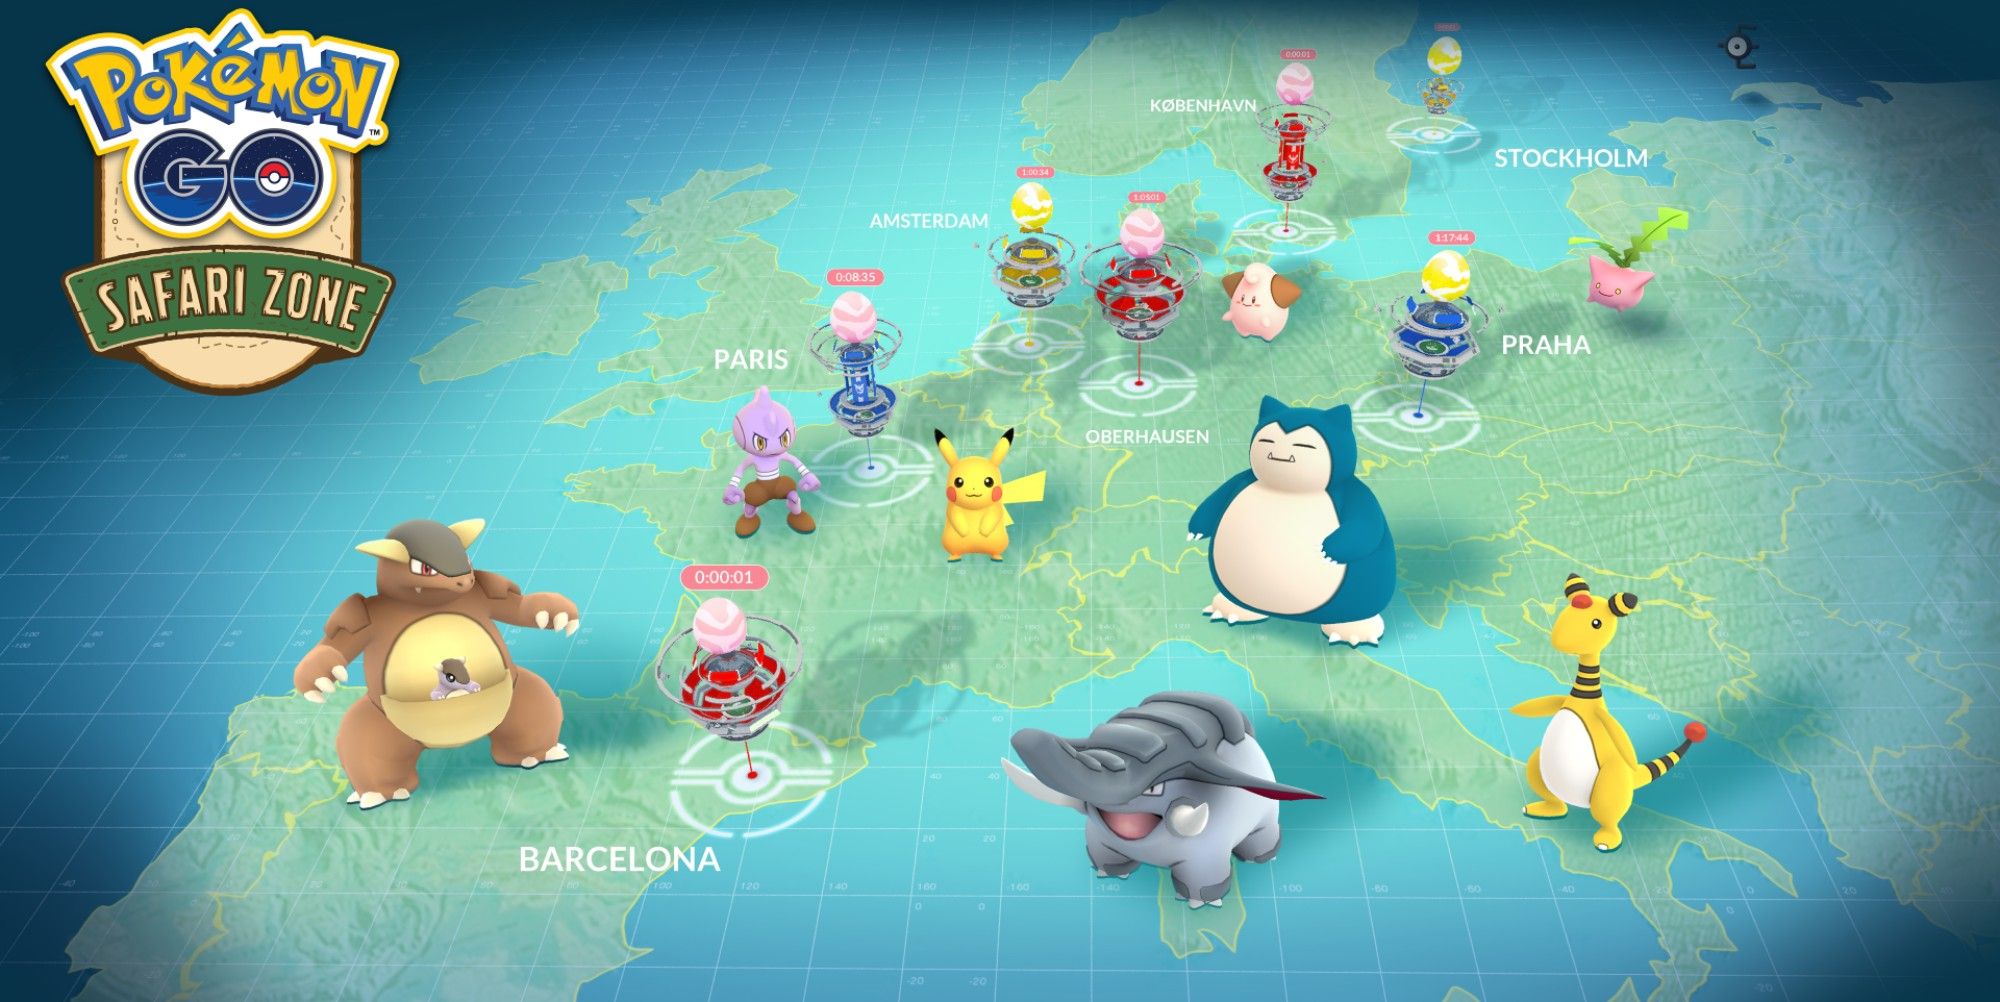 Pokemon Gos Safari Zone Is Headed To Spain This Summer